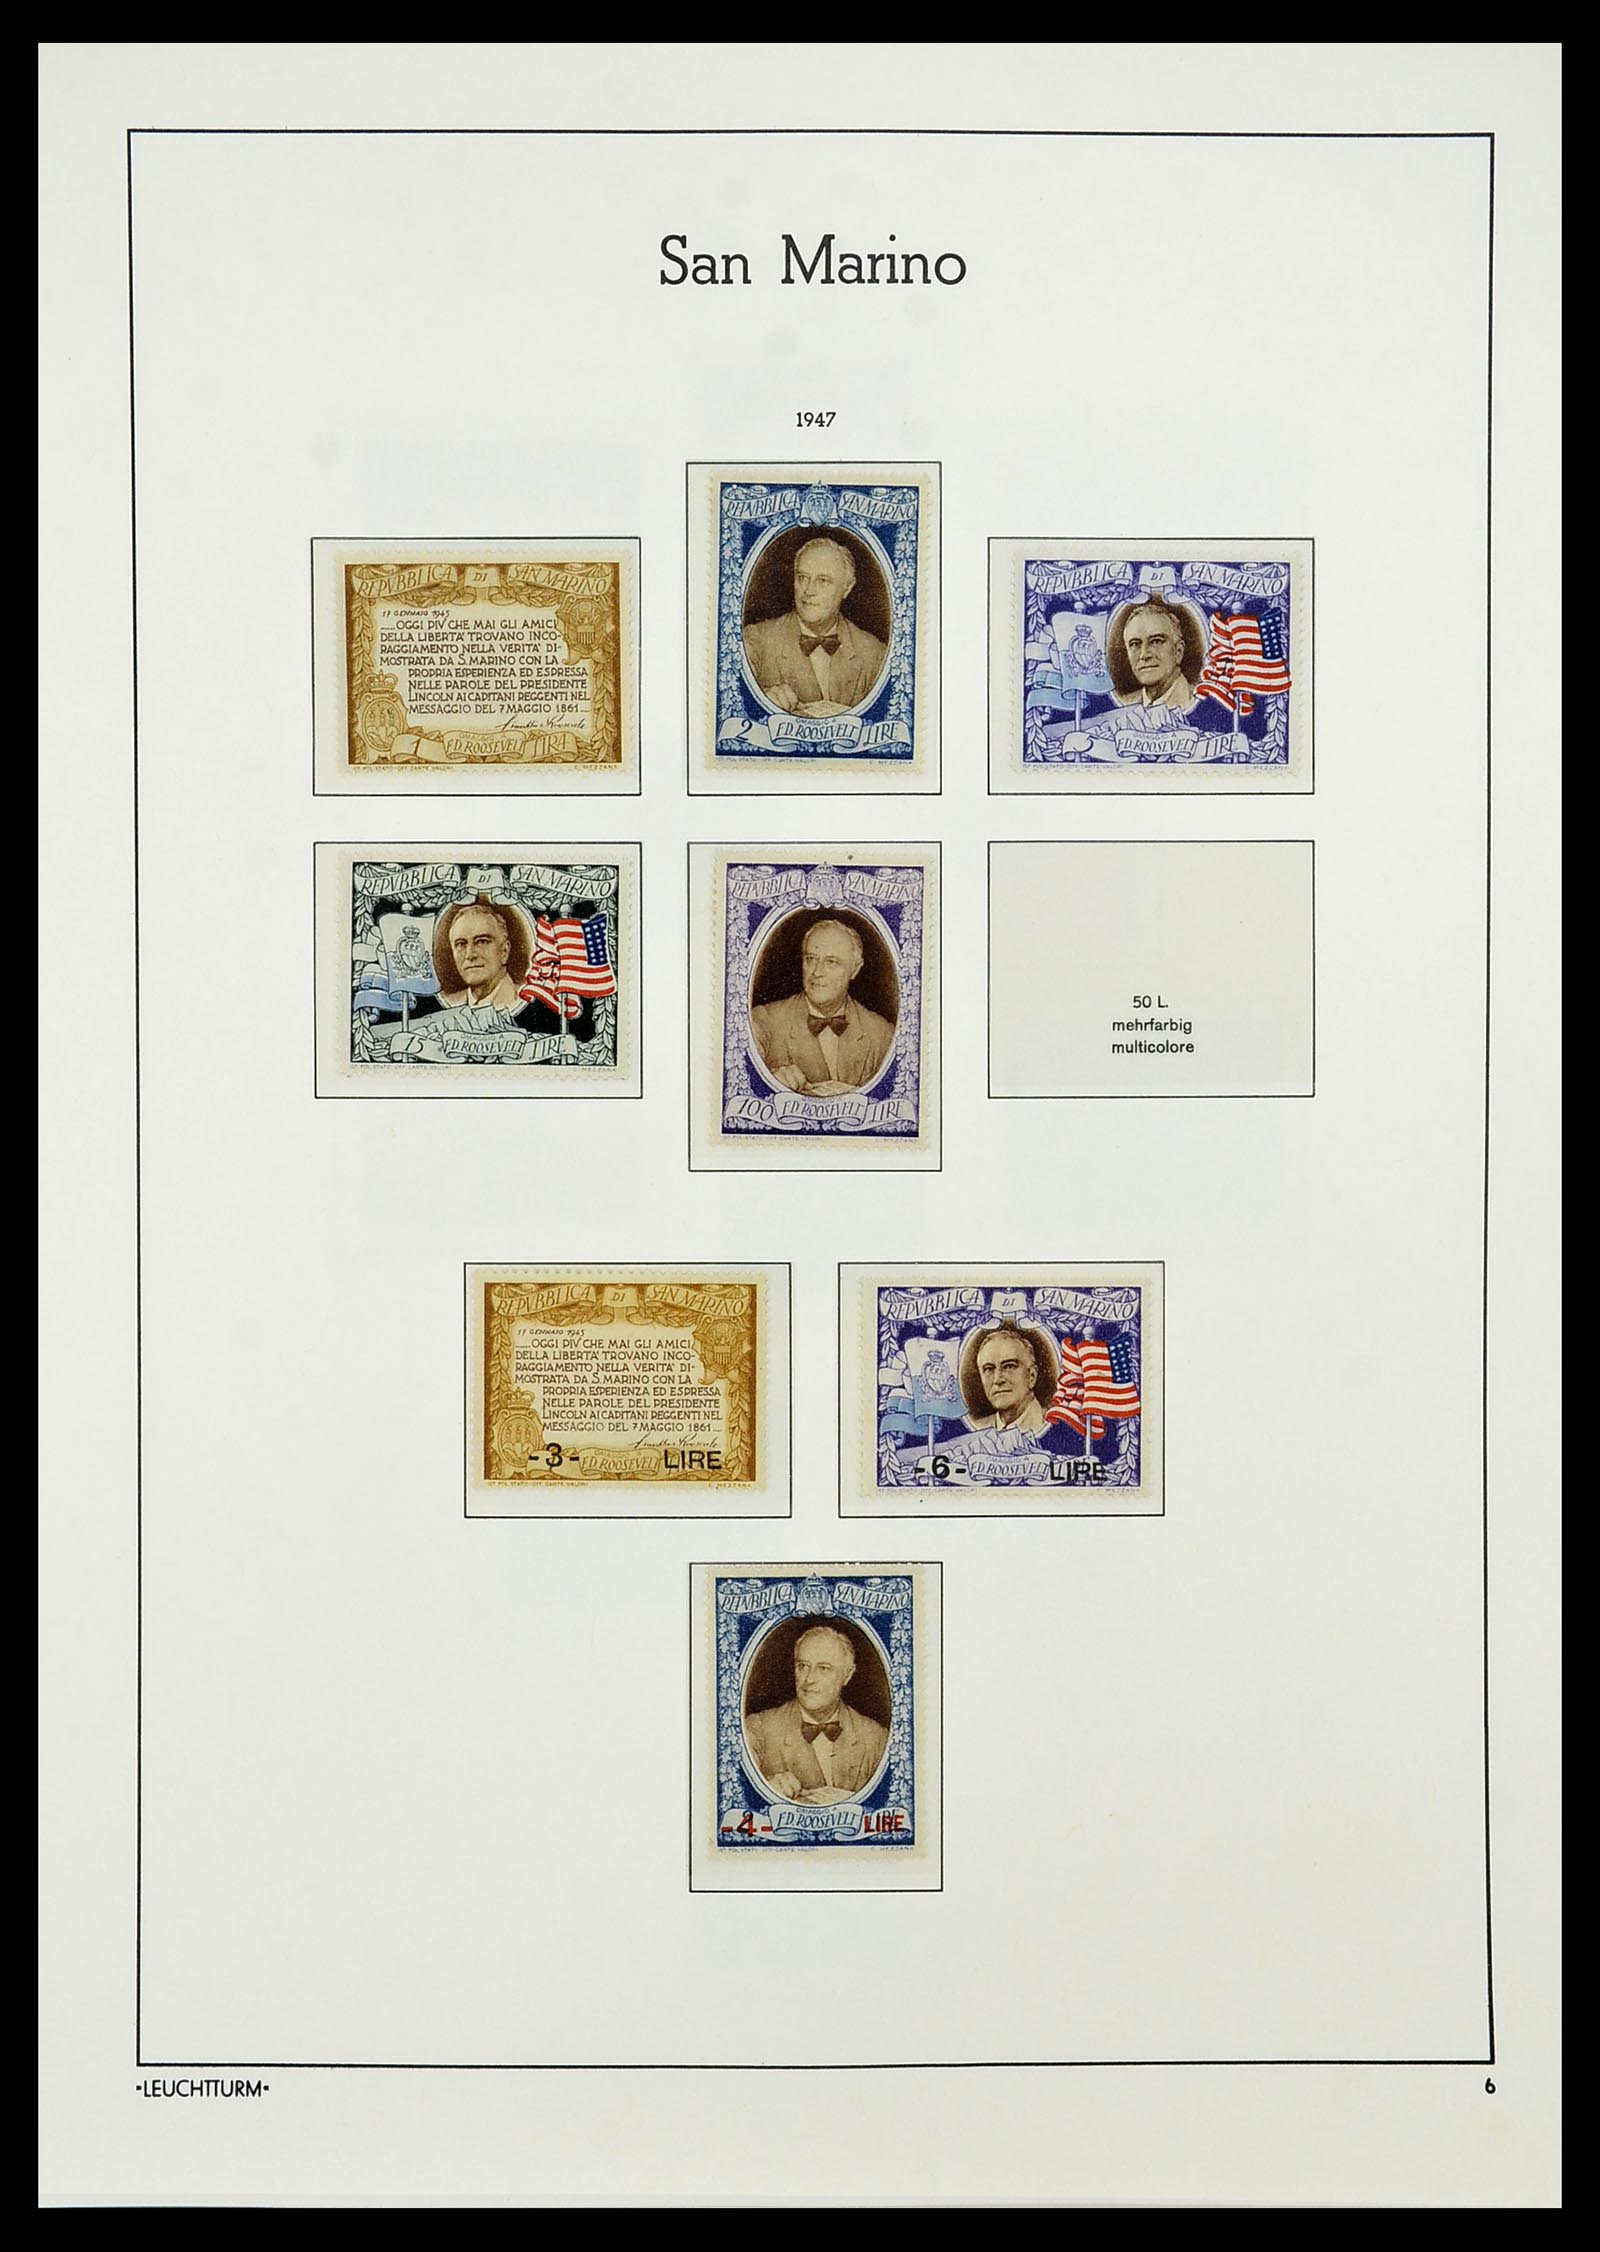 34243 040 - Stamp collection 34243 San Marino 1877-2008.